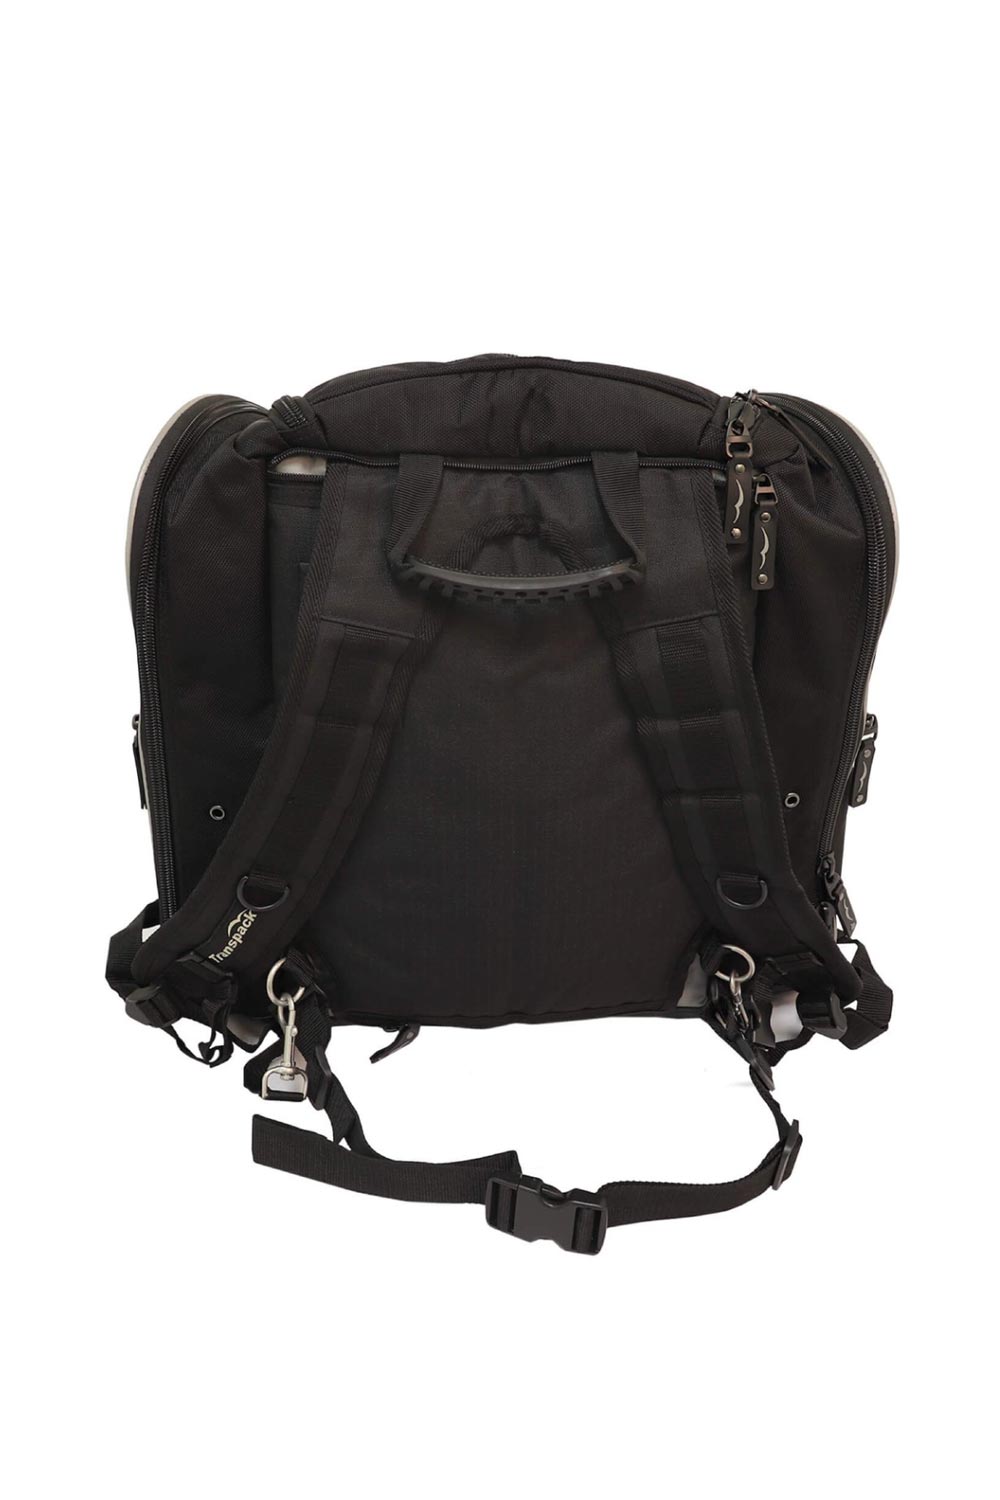 backpack straps on ski boot bag